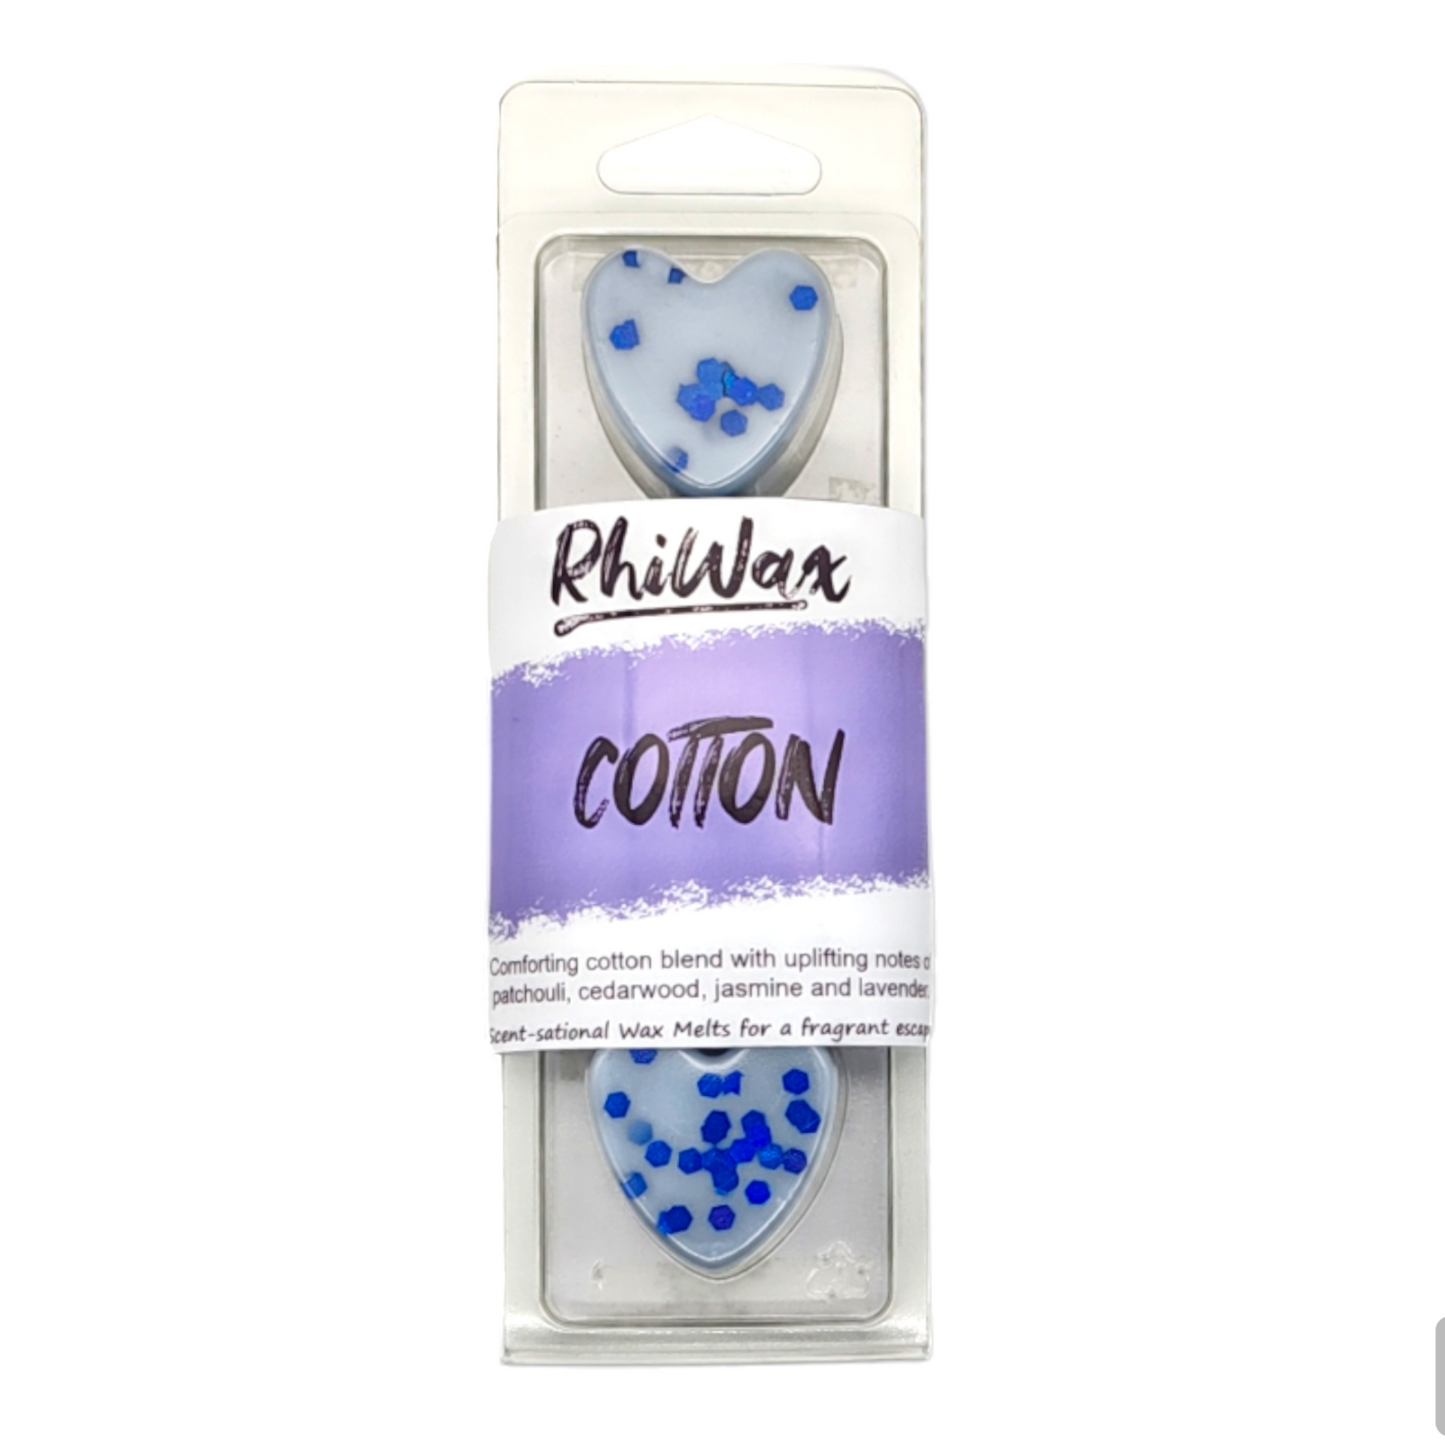 Cotton Wax Melts - Patchouli, Jasmone, Lavender, Cedarwood